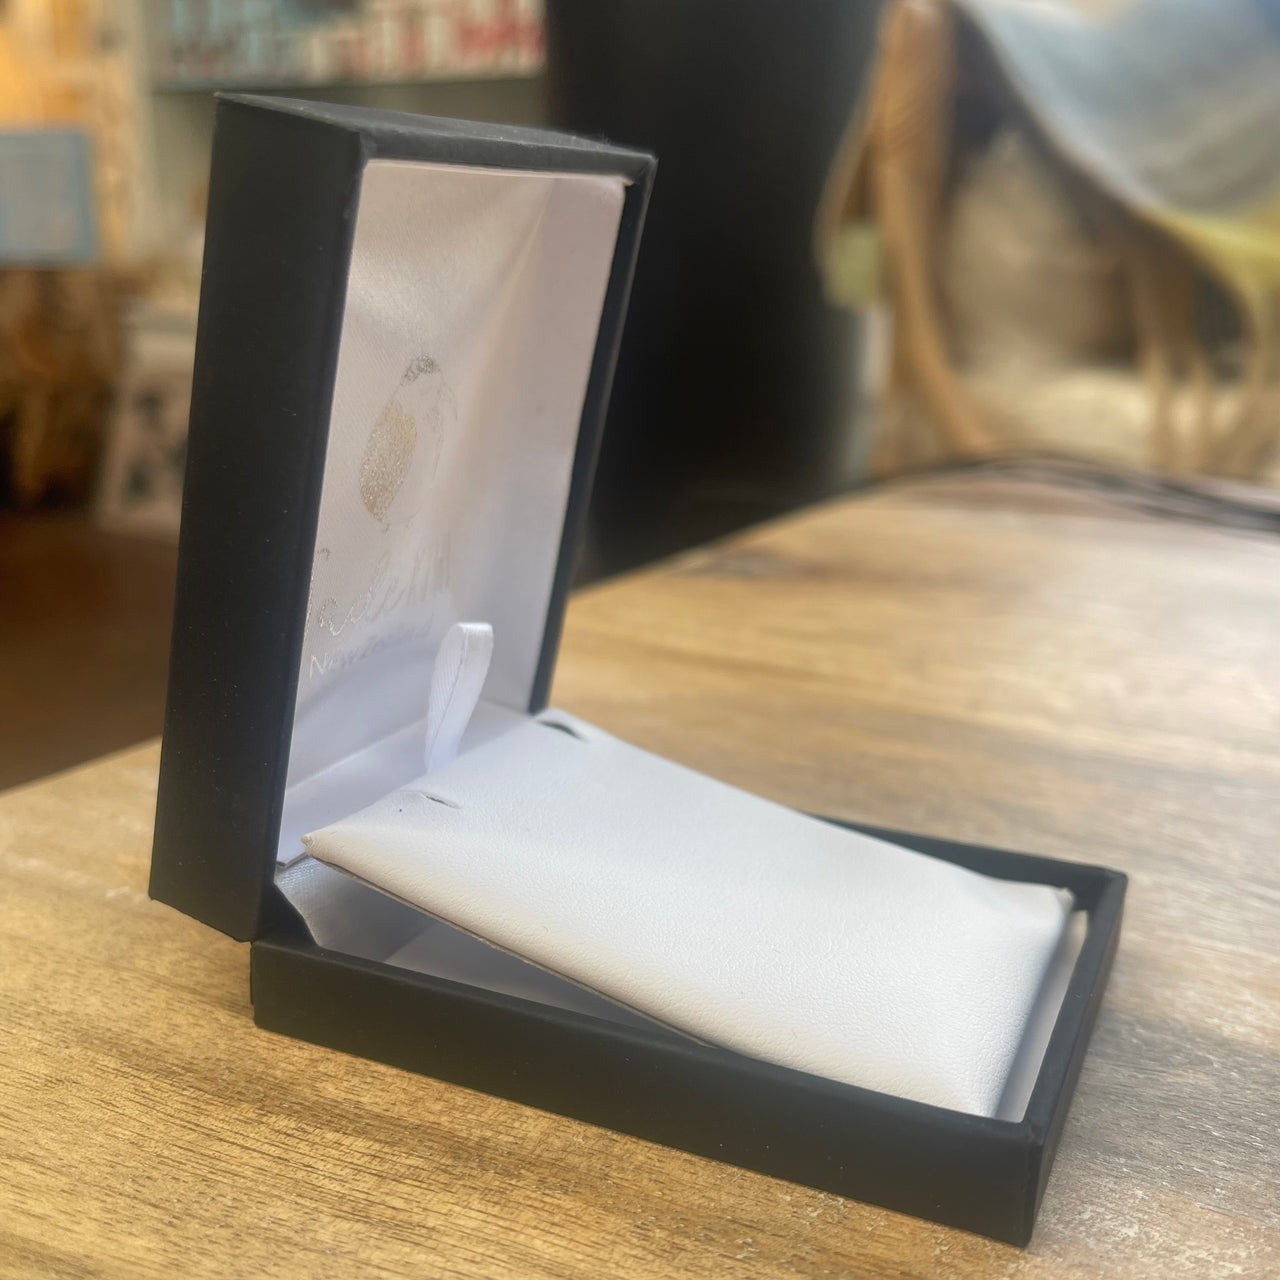 Jade Kiwi Gift Box